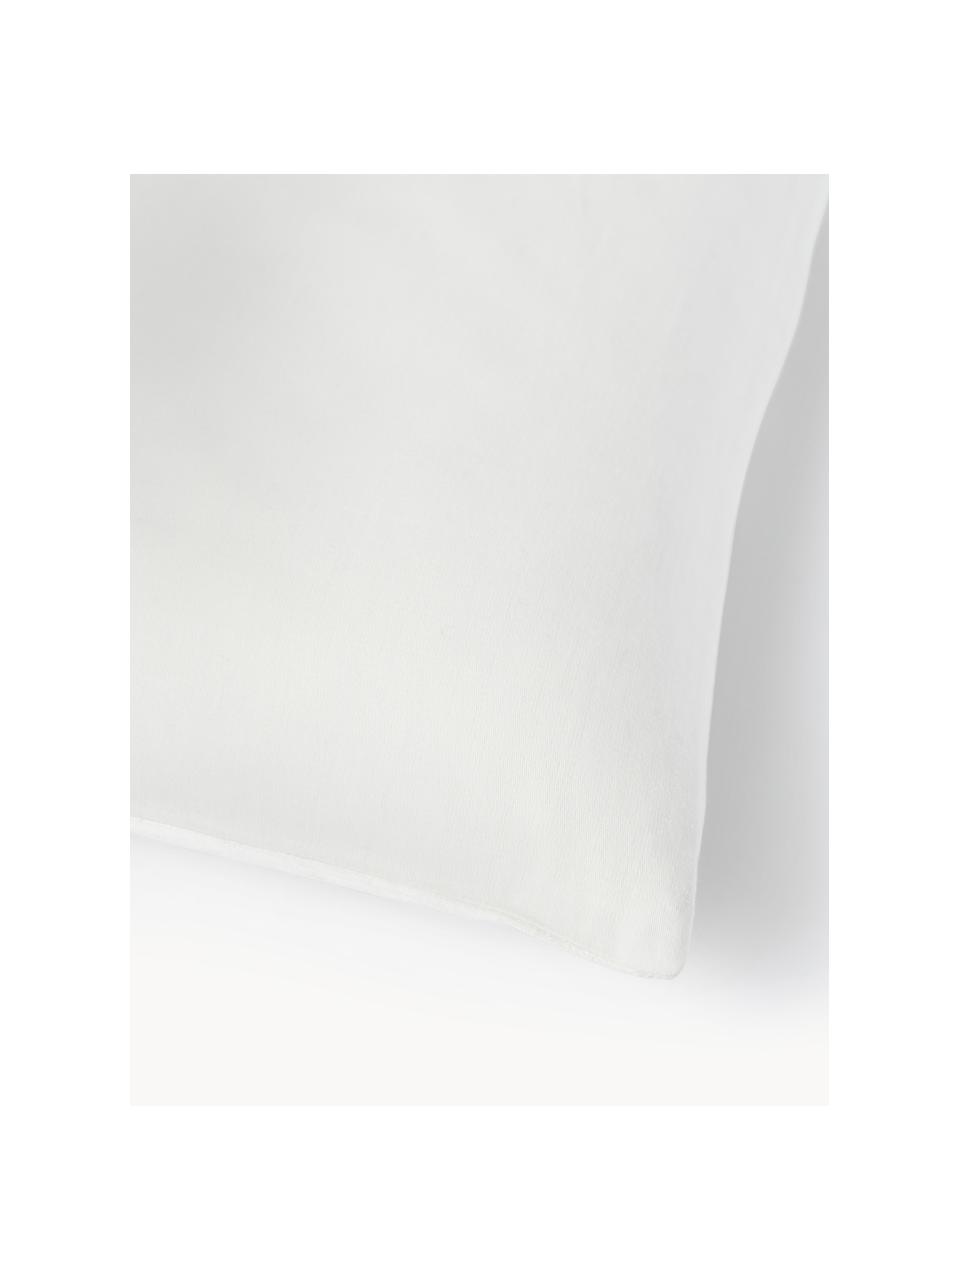 Kussenhoes Aryane uit zijde, Wit, B 45 x L 45 cm